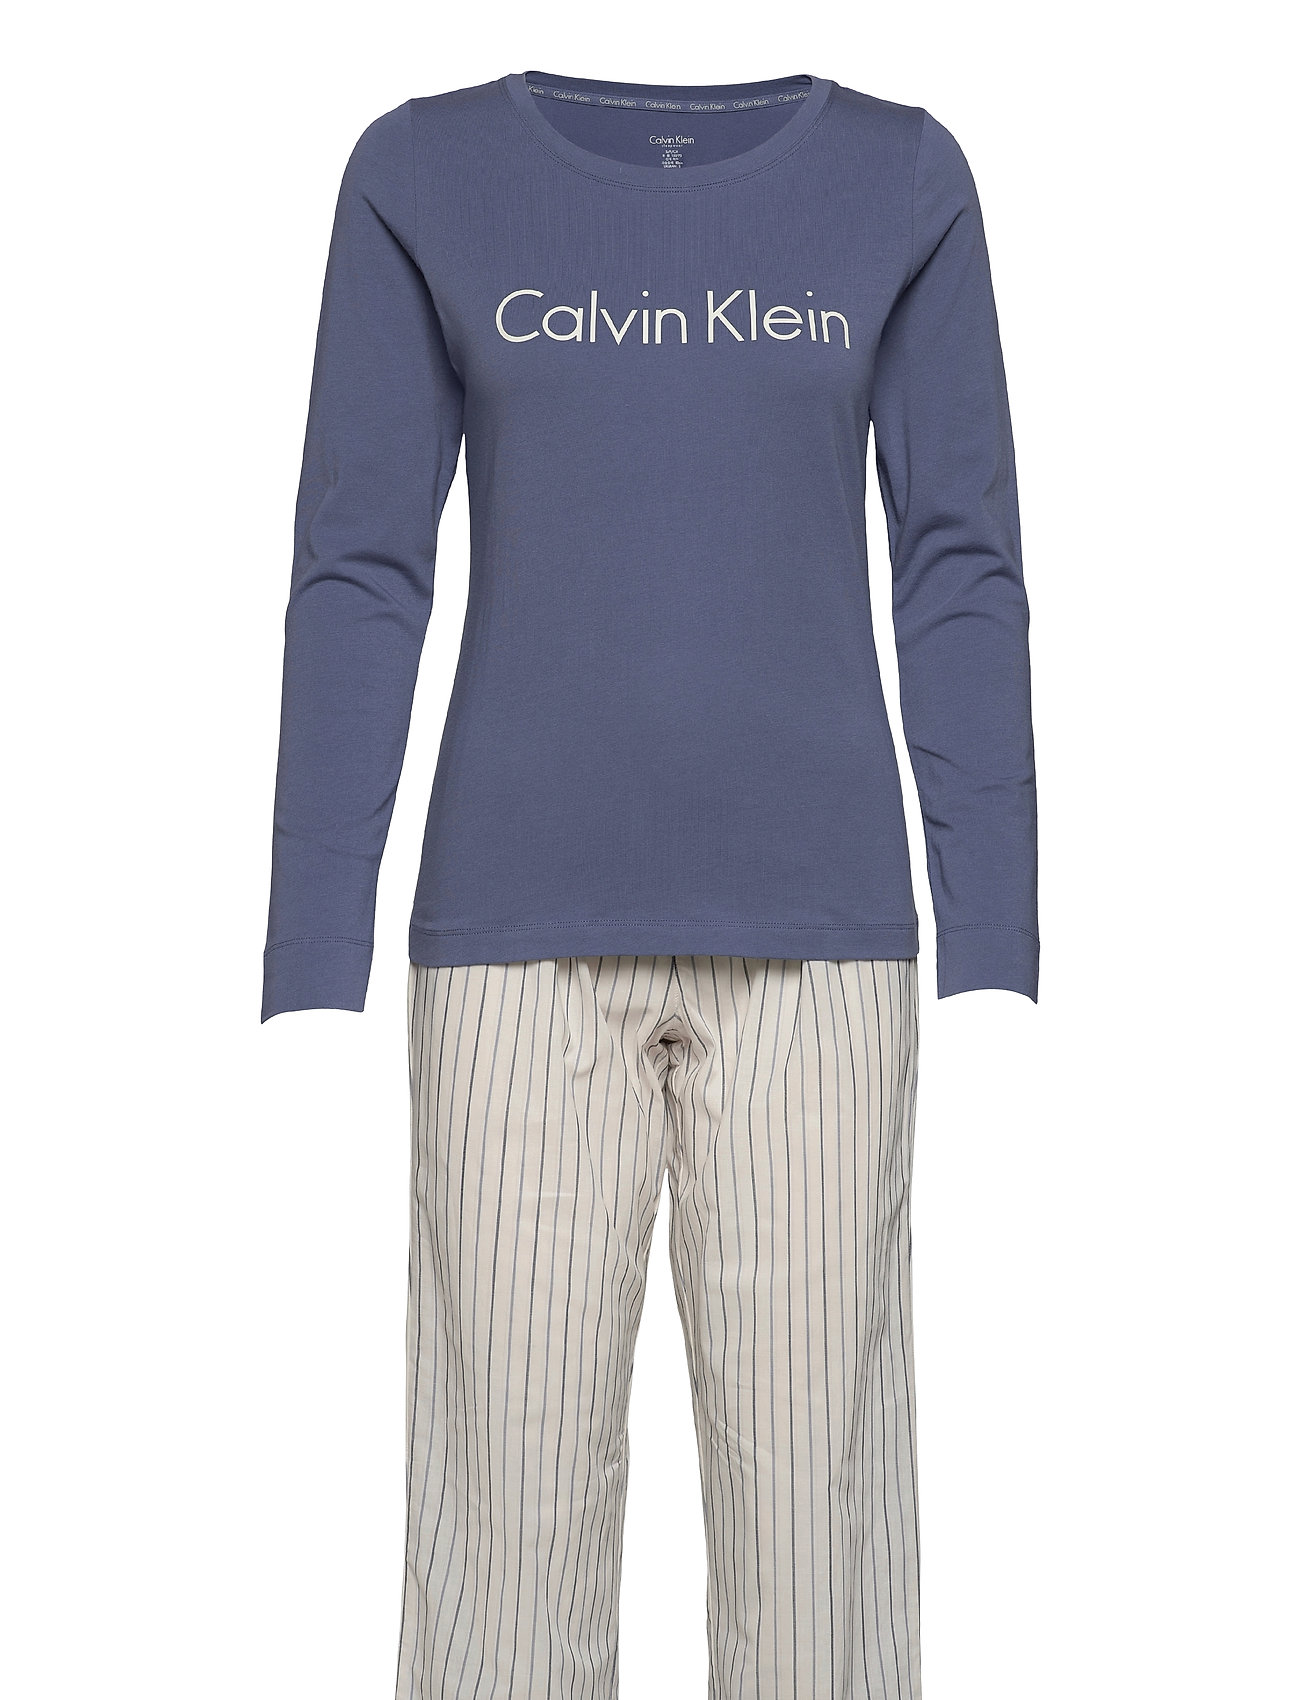 FADED VIOLET/ALTERNATING STRIPE Klein L/S Pant Set Pyjamas Nattøj Multi/mønstret Calvin Klein pyjamas for dame -